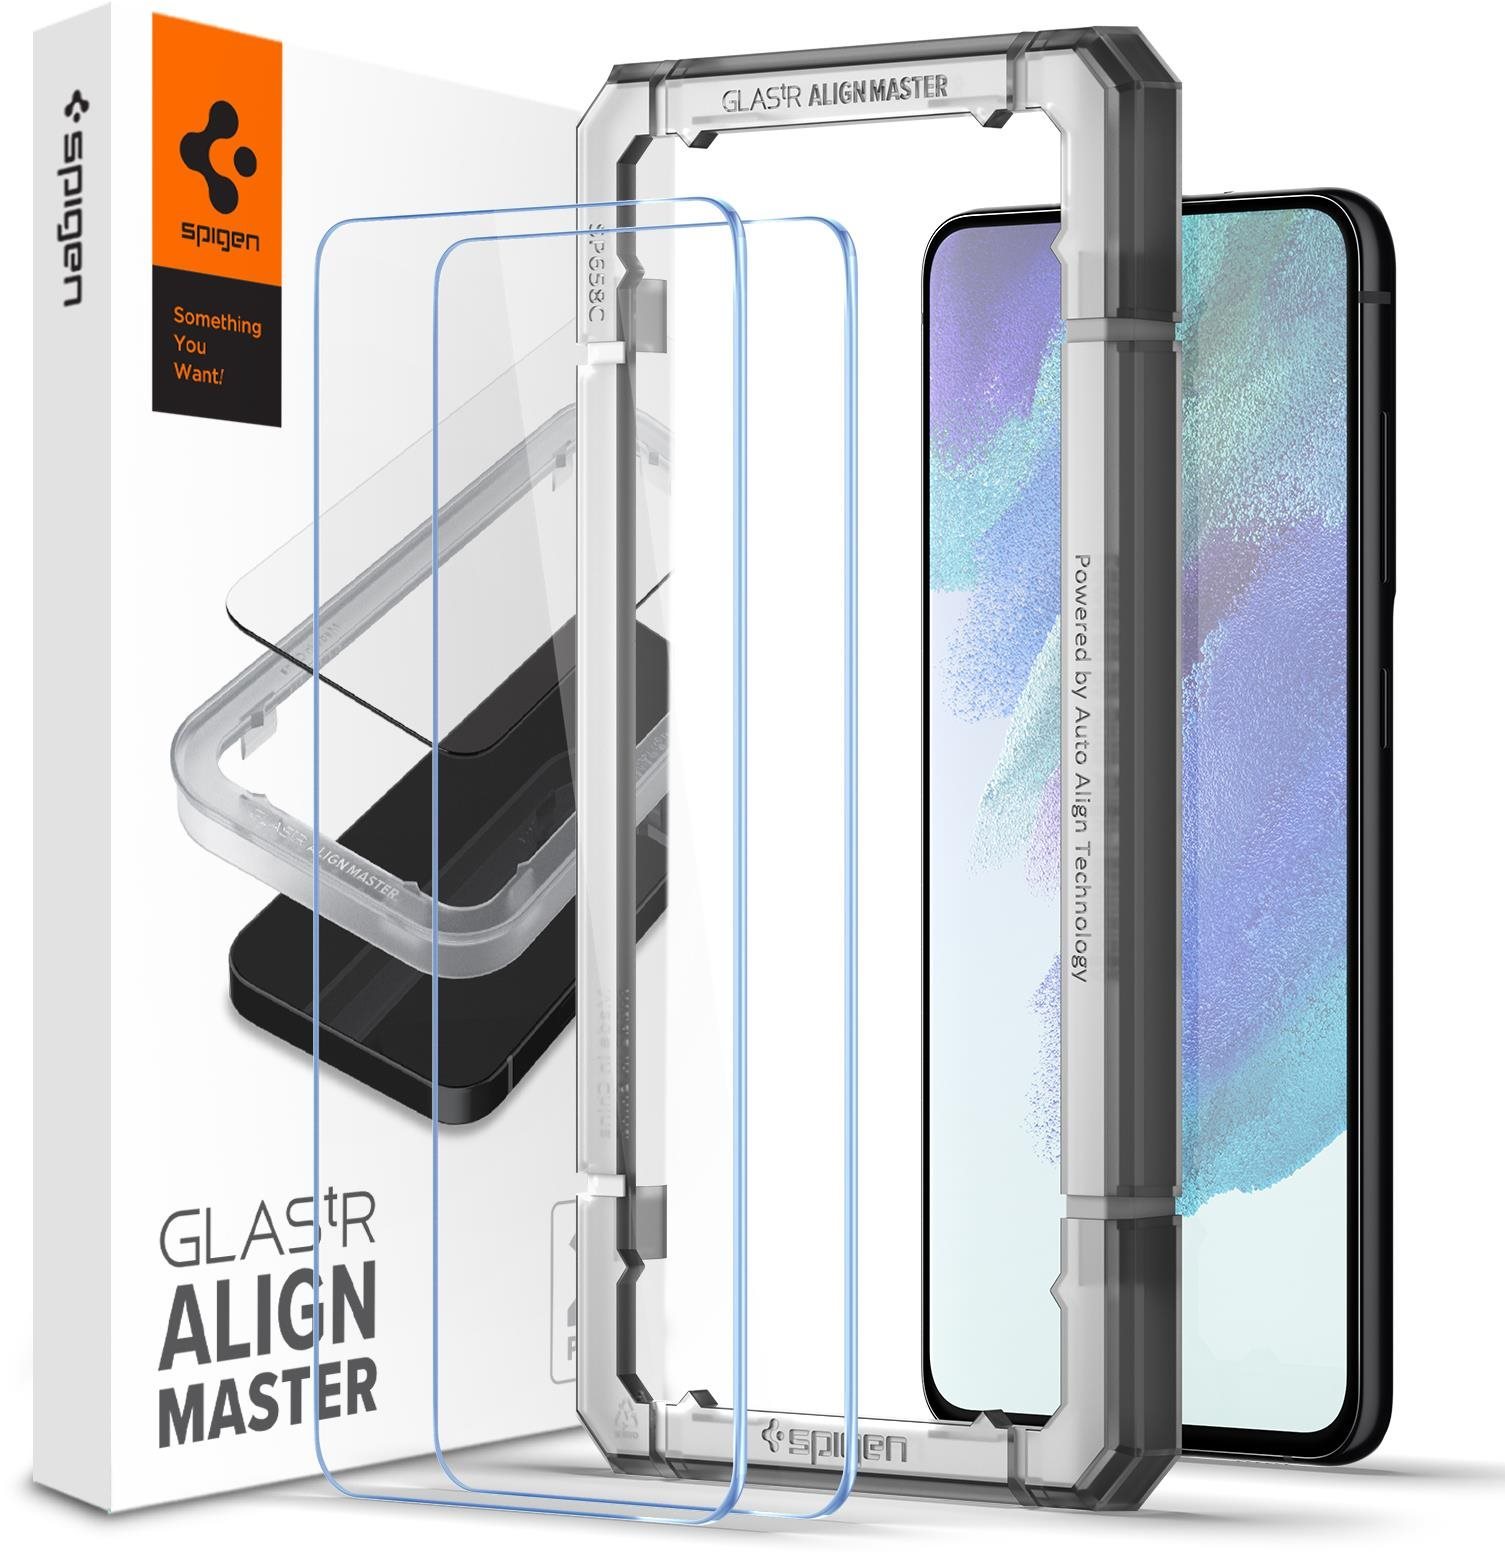 Üvegfólia Spigen Glas.tR AlignMaster 2 Pack Samsung Galaxy S21 FE 5G üvegfólia